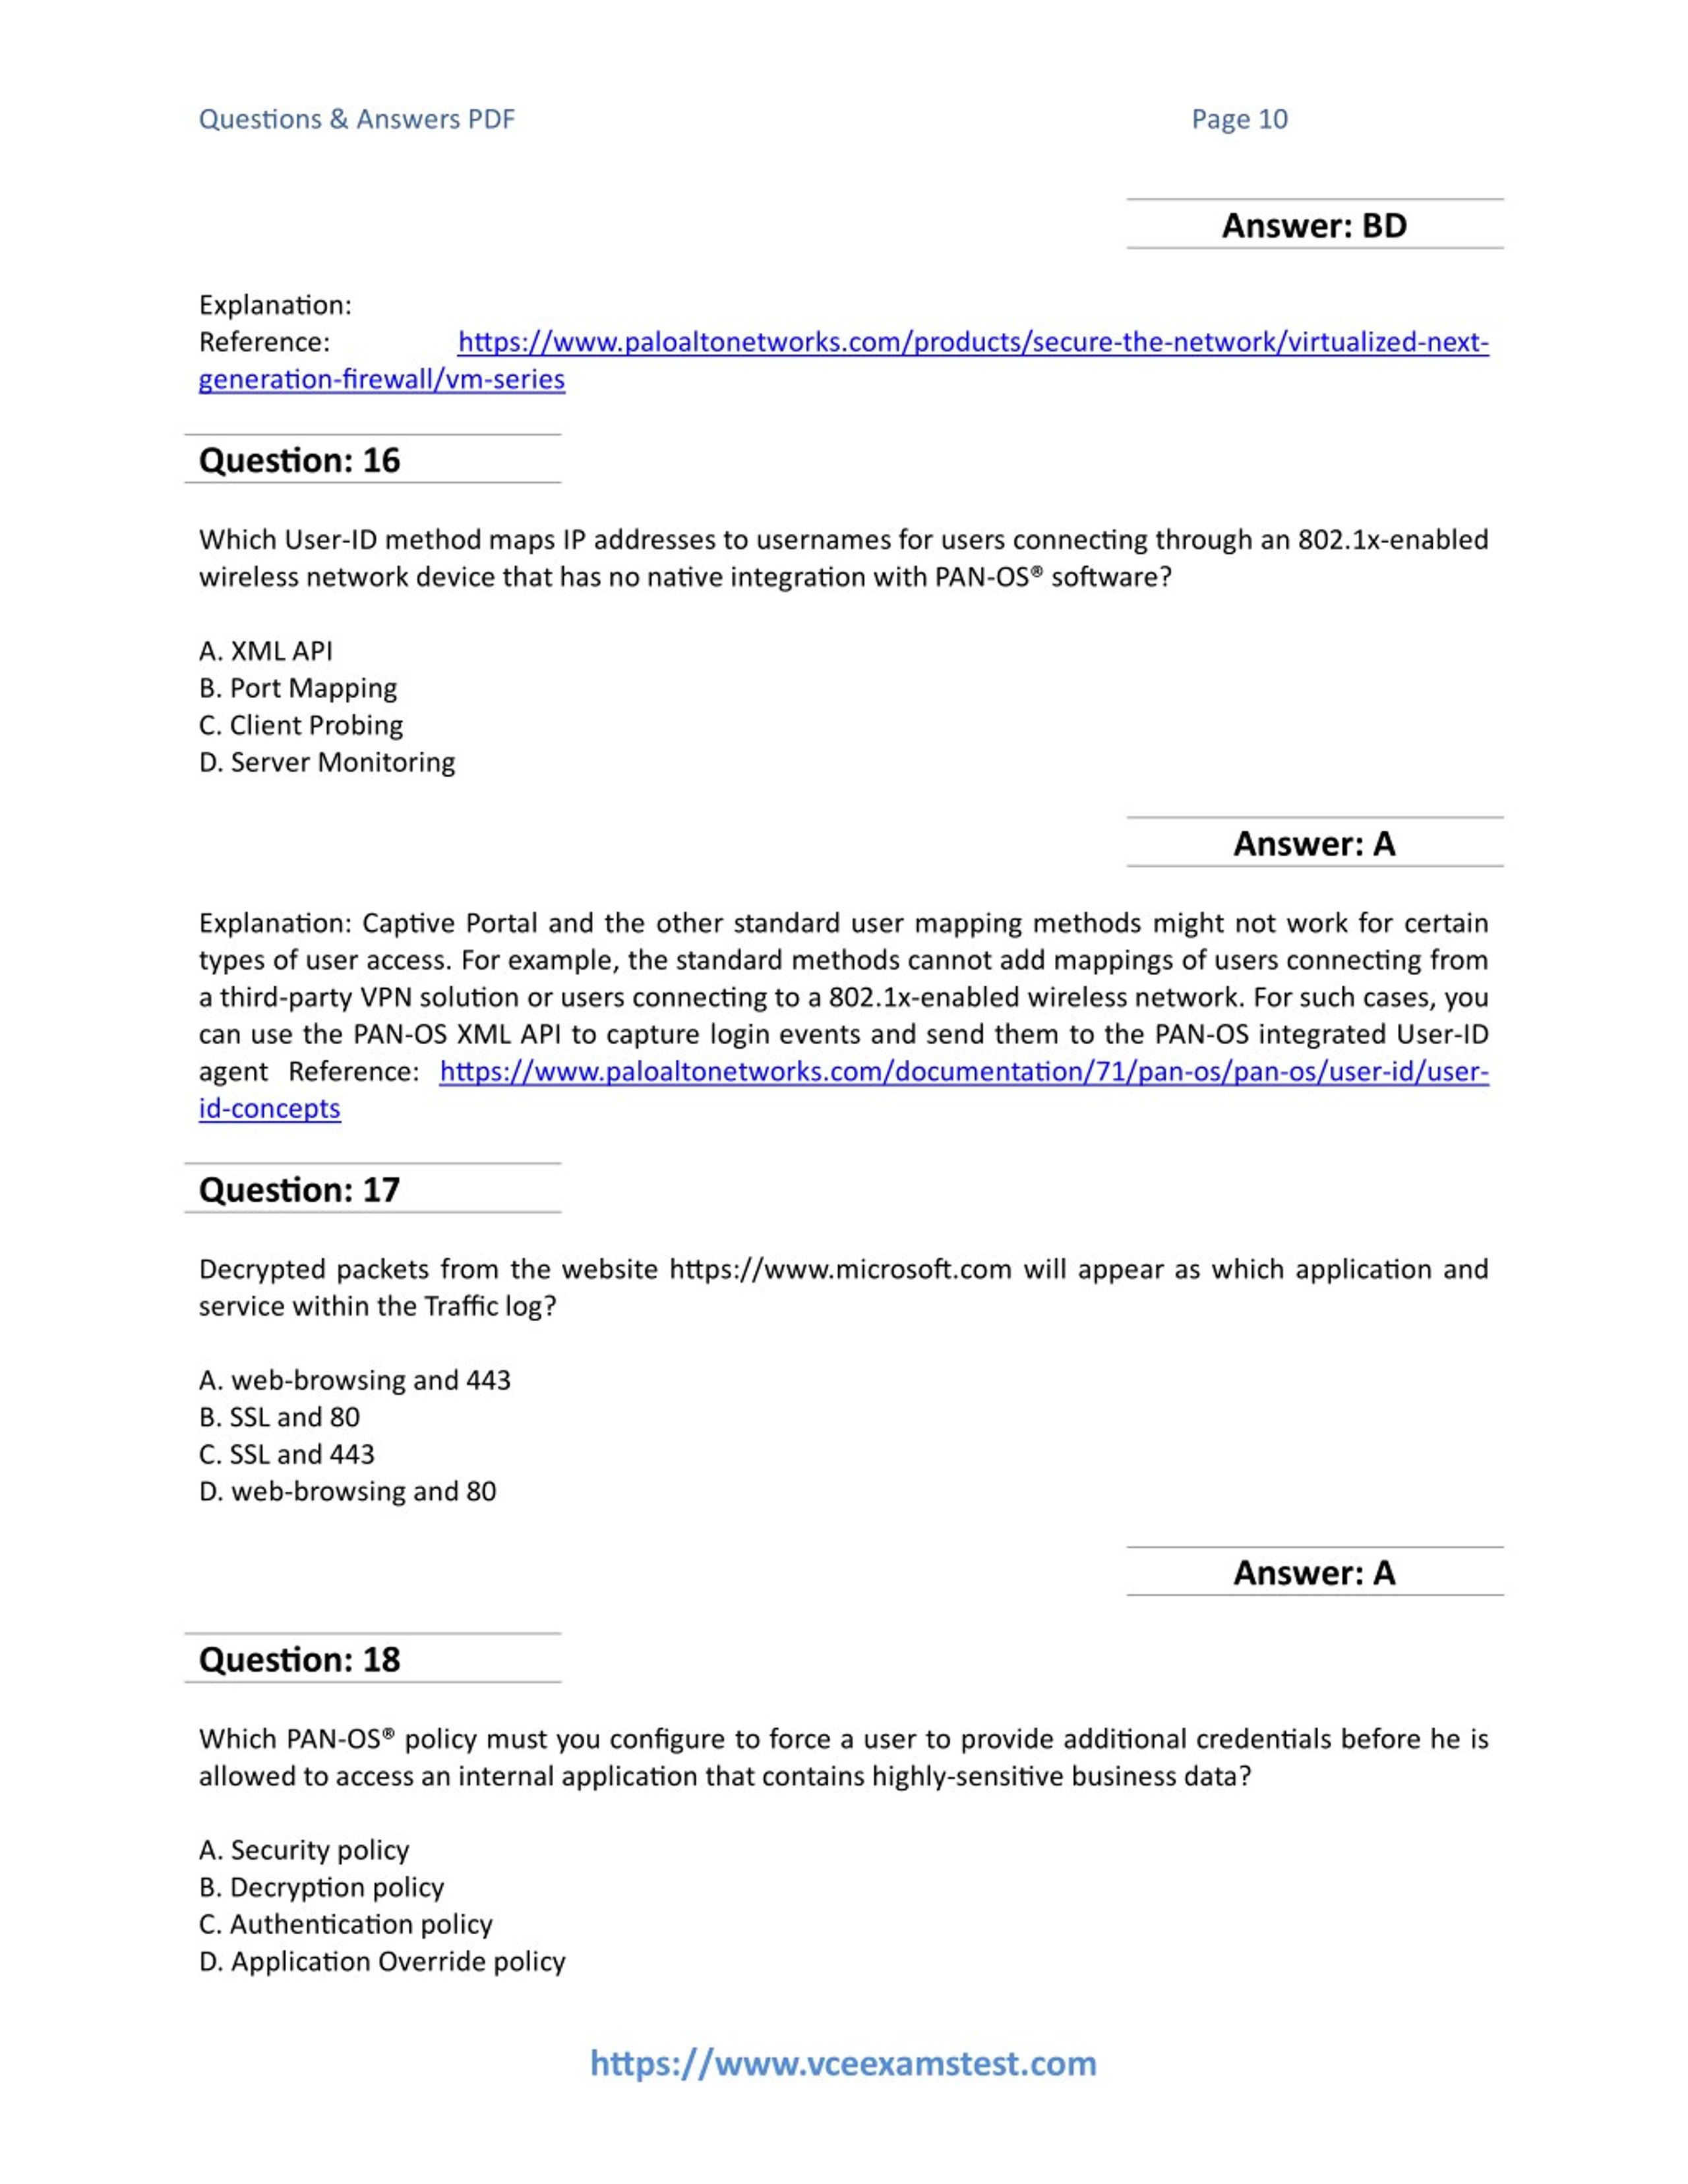 PPT - Get Paloalto Networks PCNSE (PAN OS 8.0) VCE Exam PDF 2018 Sns-Brigh10